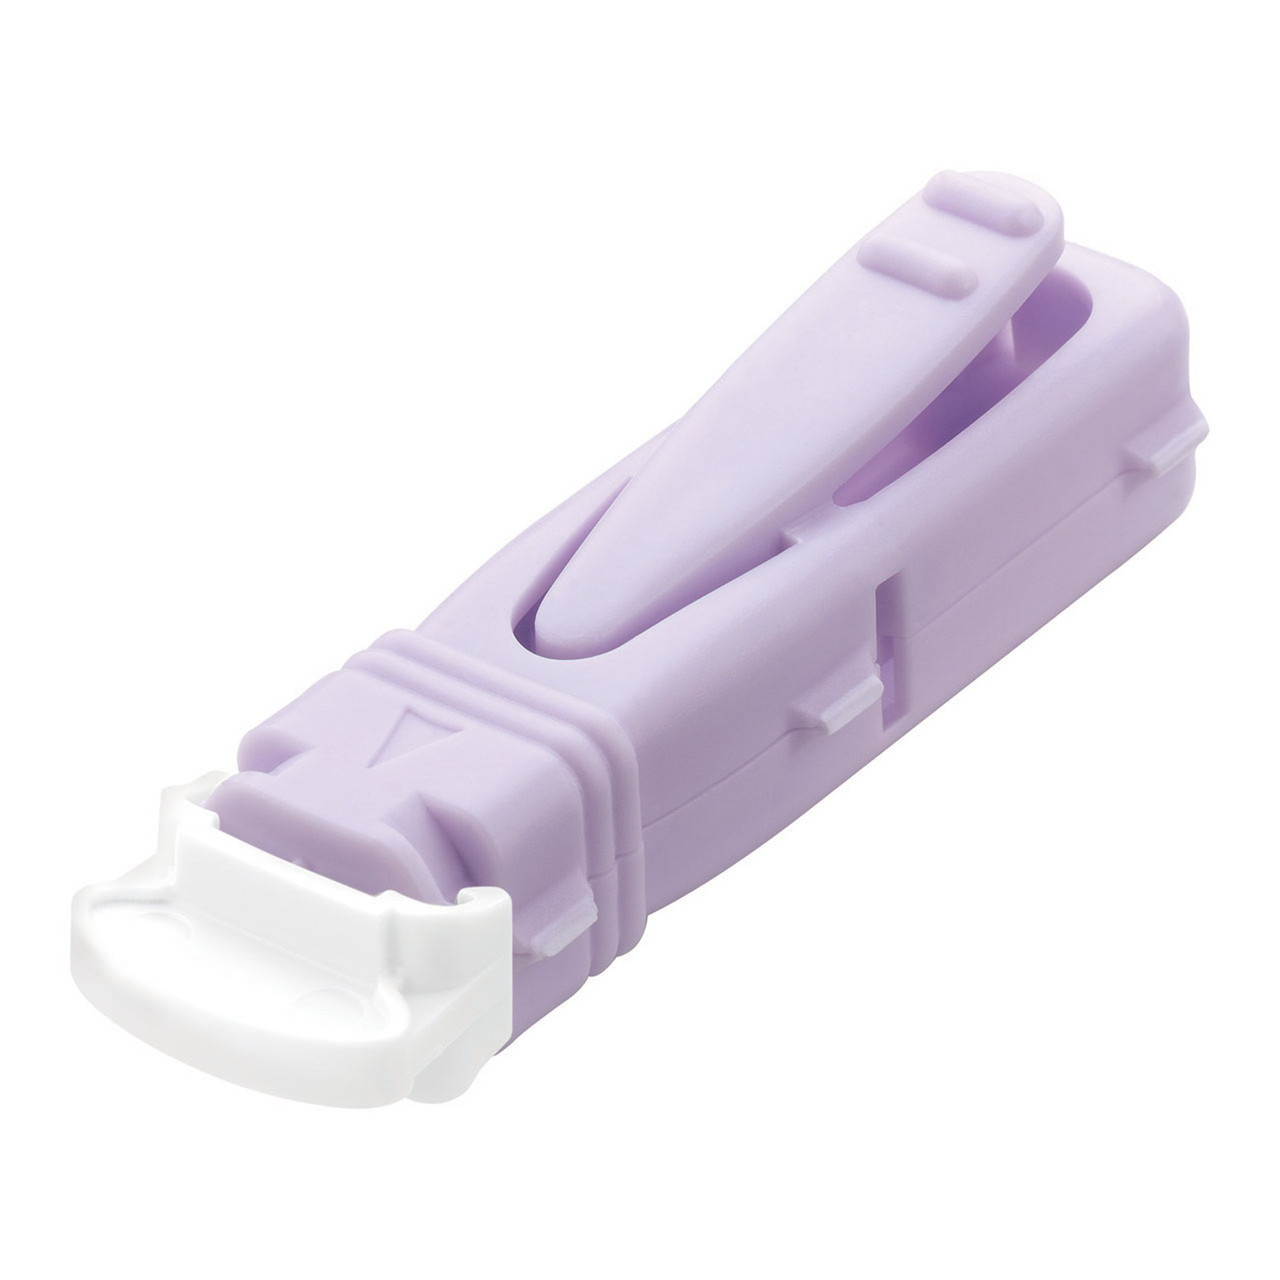 Unistik Push-Button Safety Lancet, Diabetic Testing Supplies, 28 Gauge, 1.8  mm Simply Medical